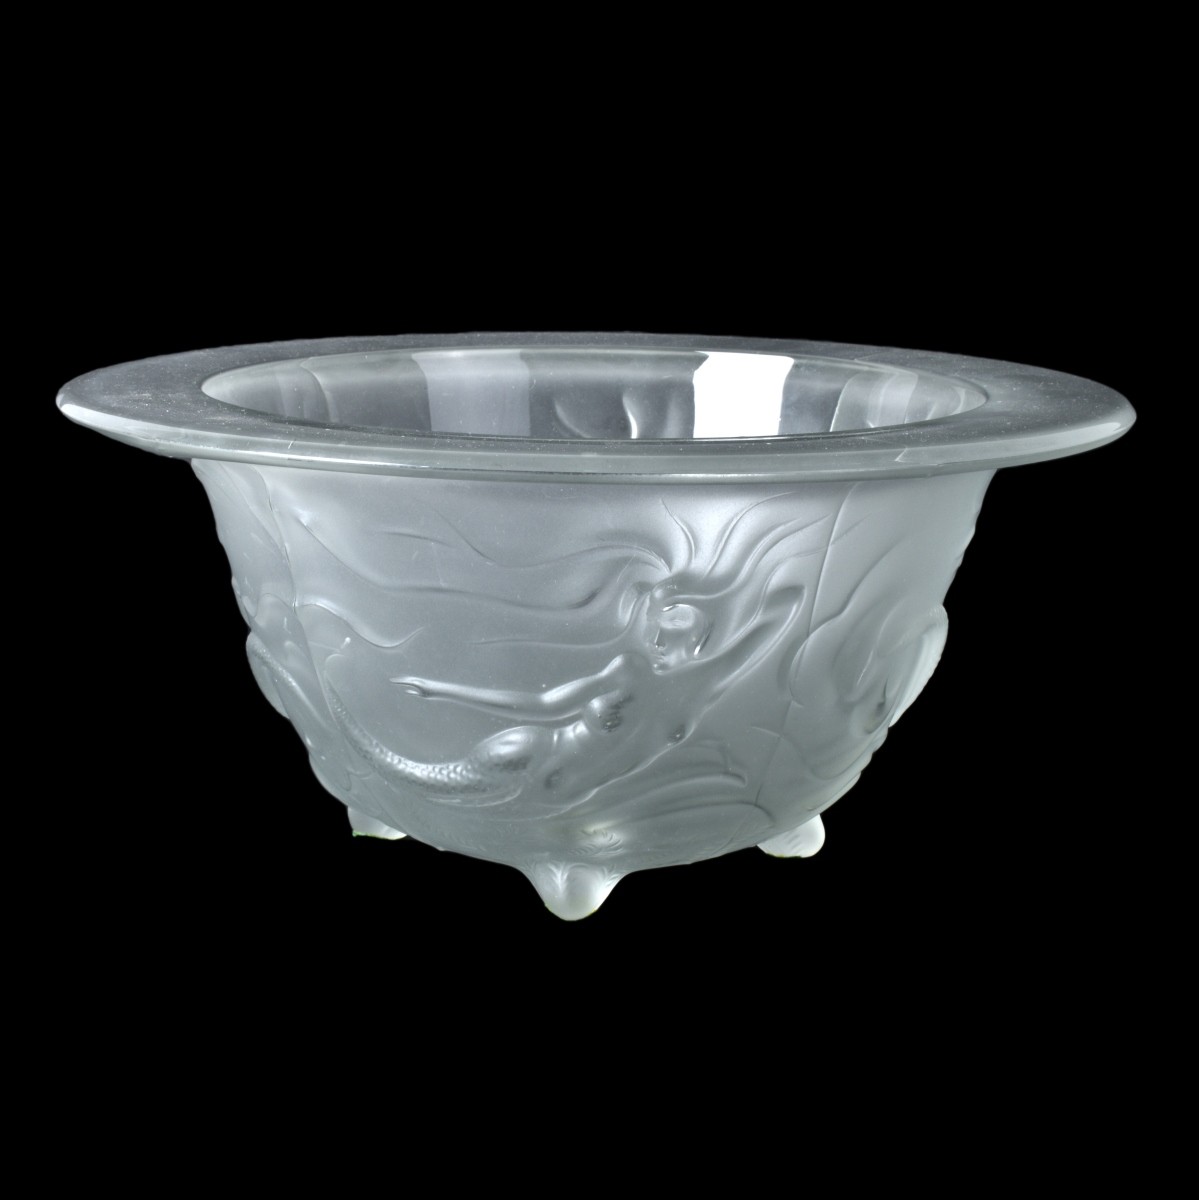 Josef Barolac (20th C.) Art Glass Bowl